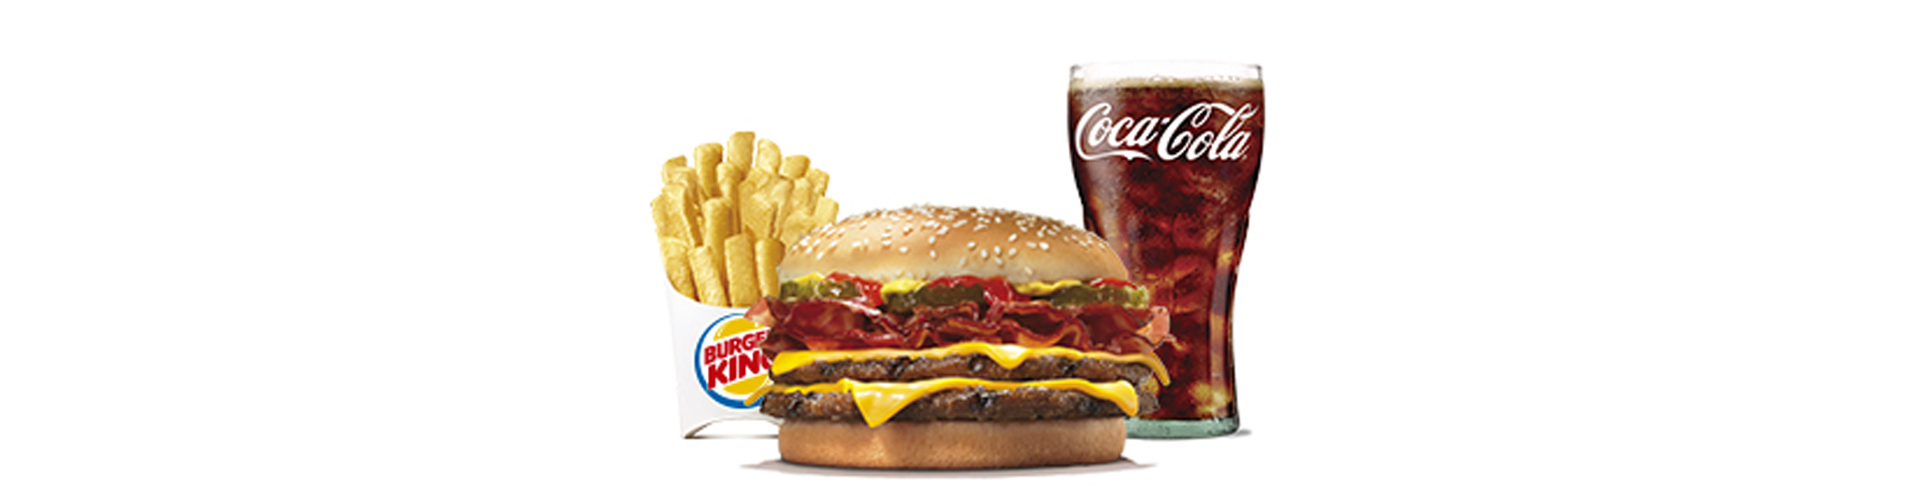 burgerking-40001718-limonada-aros